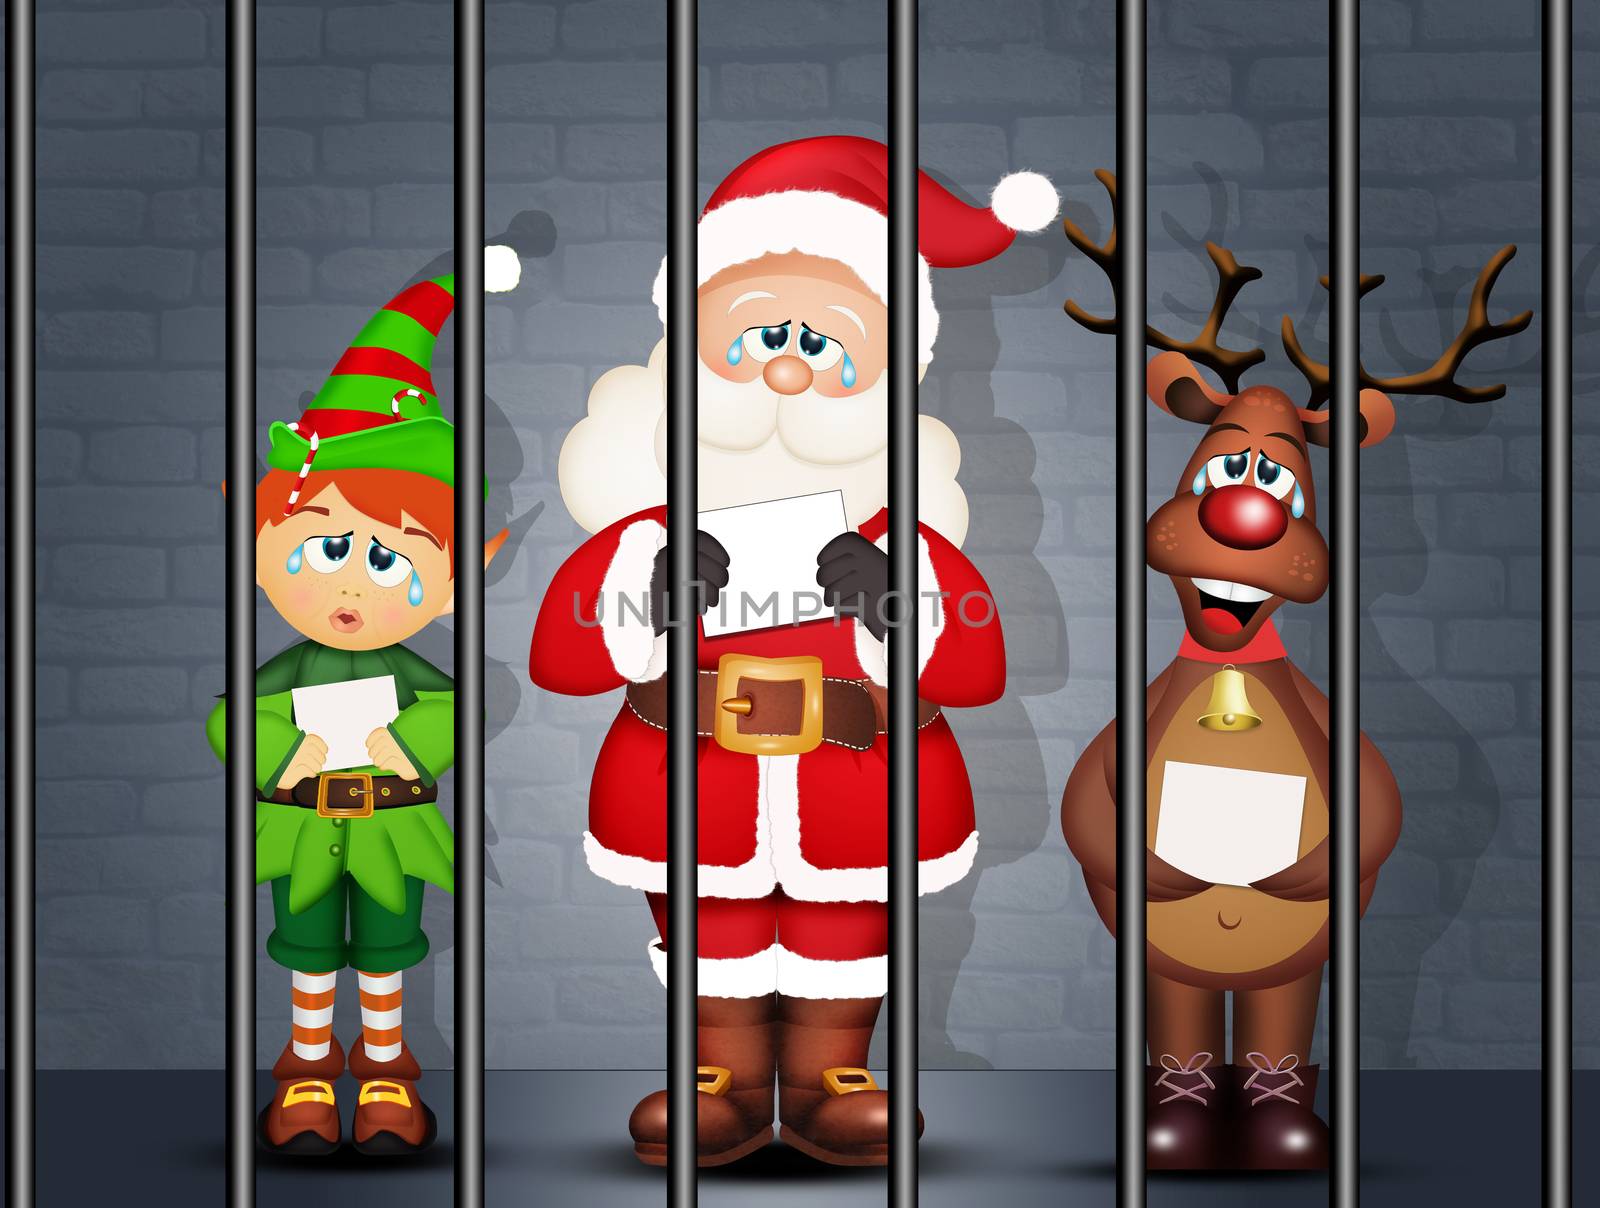 Santa Claus, Elf and reindeer in prison by adrenalina